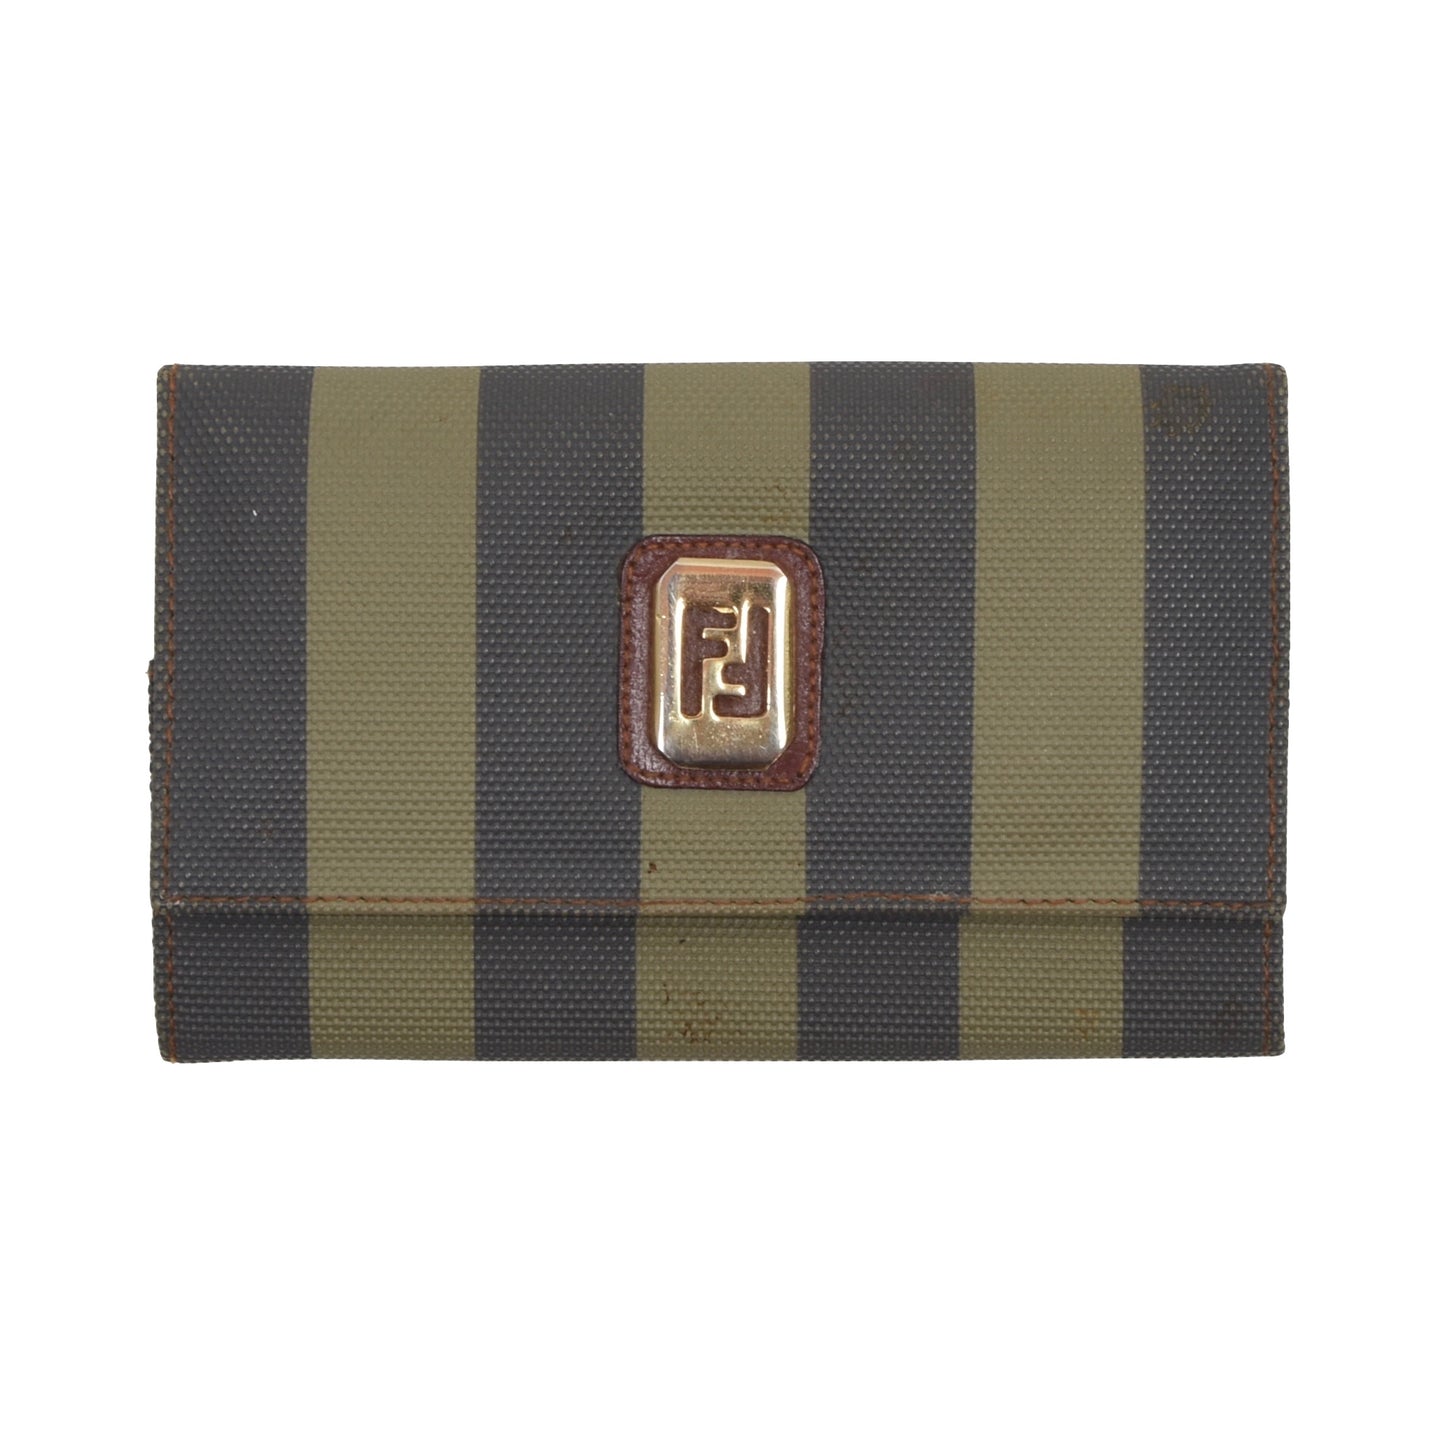 Vintage Fendi Wallet - Striped